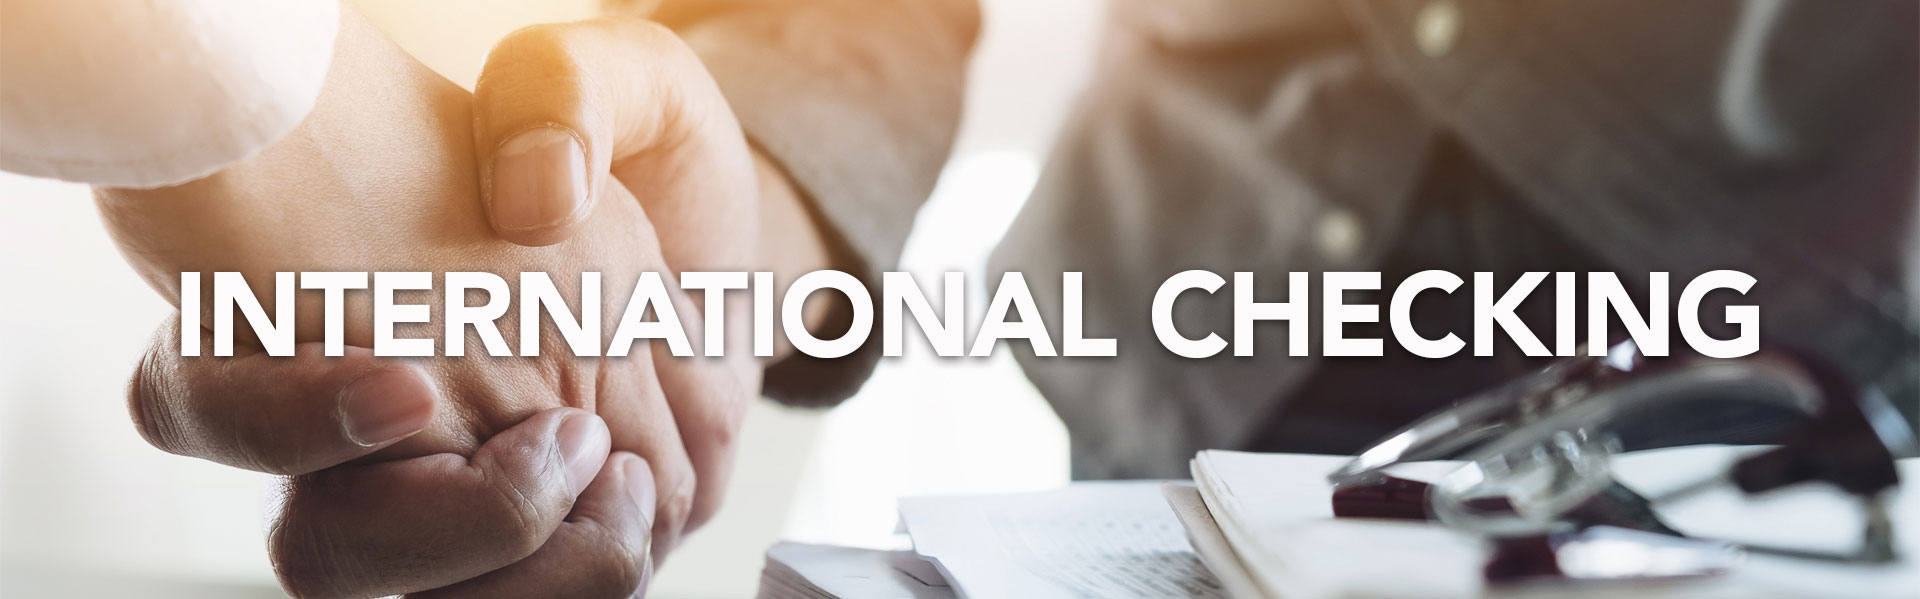 IBC Bank International Checking Guide